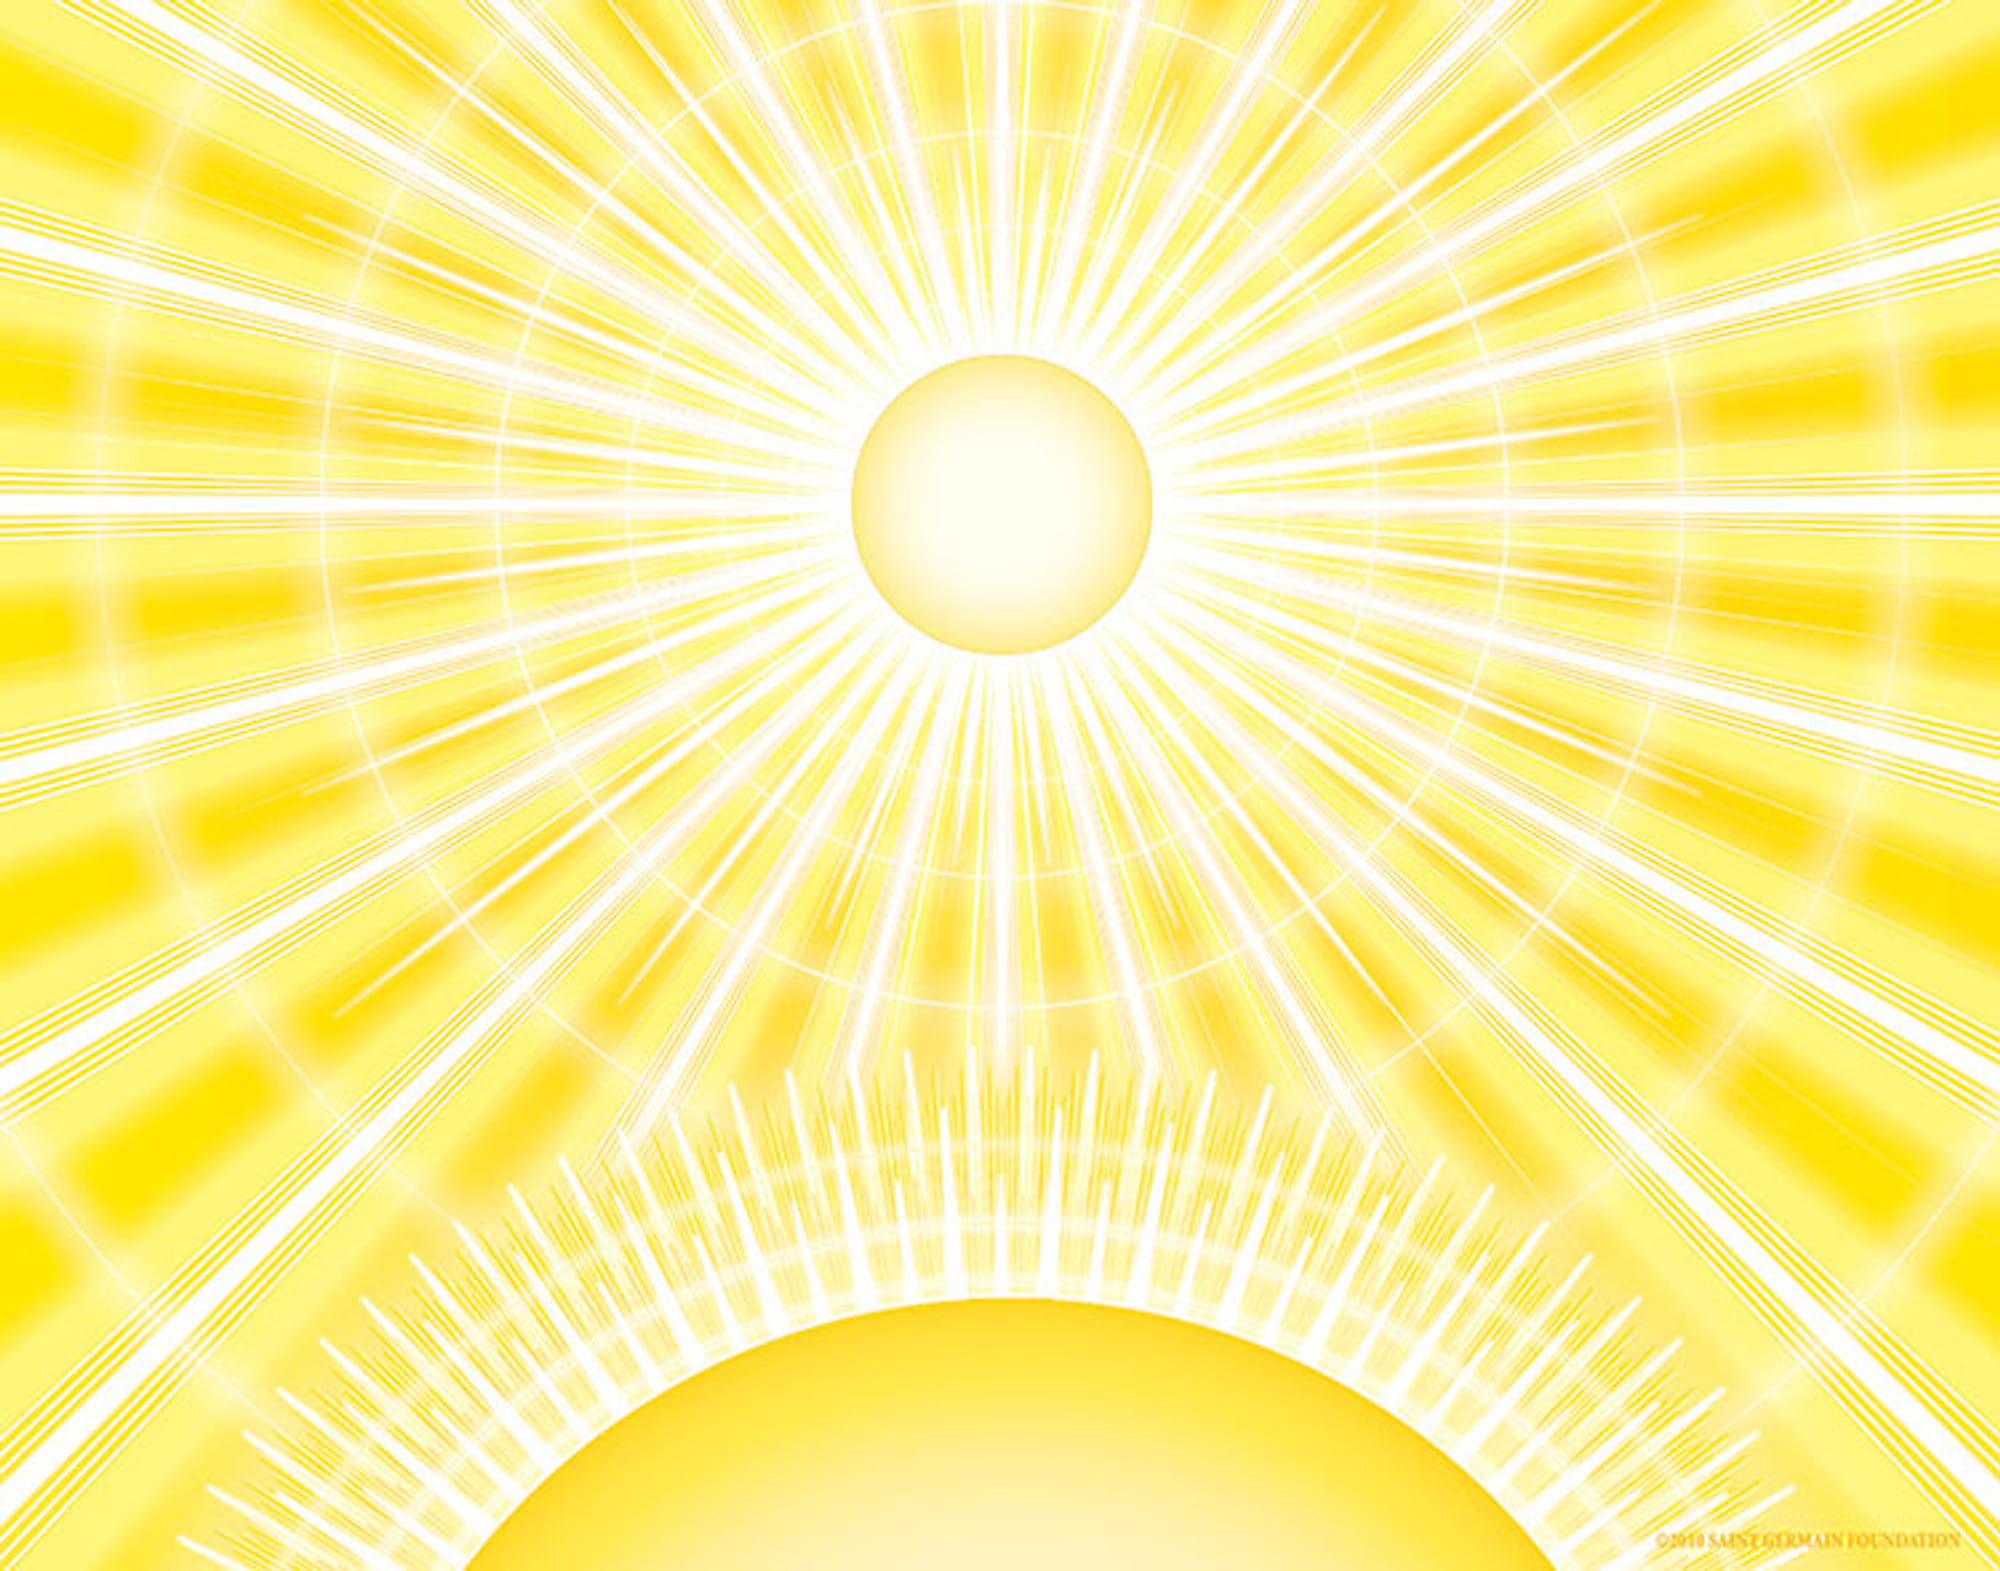 7th Central Sun of illumination